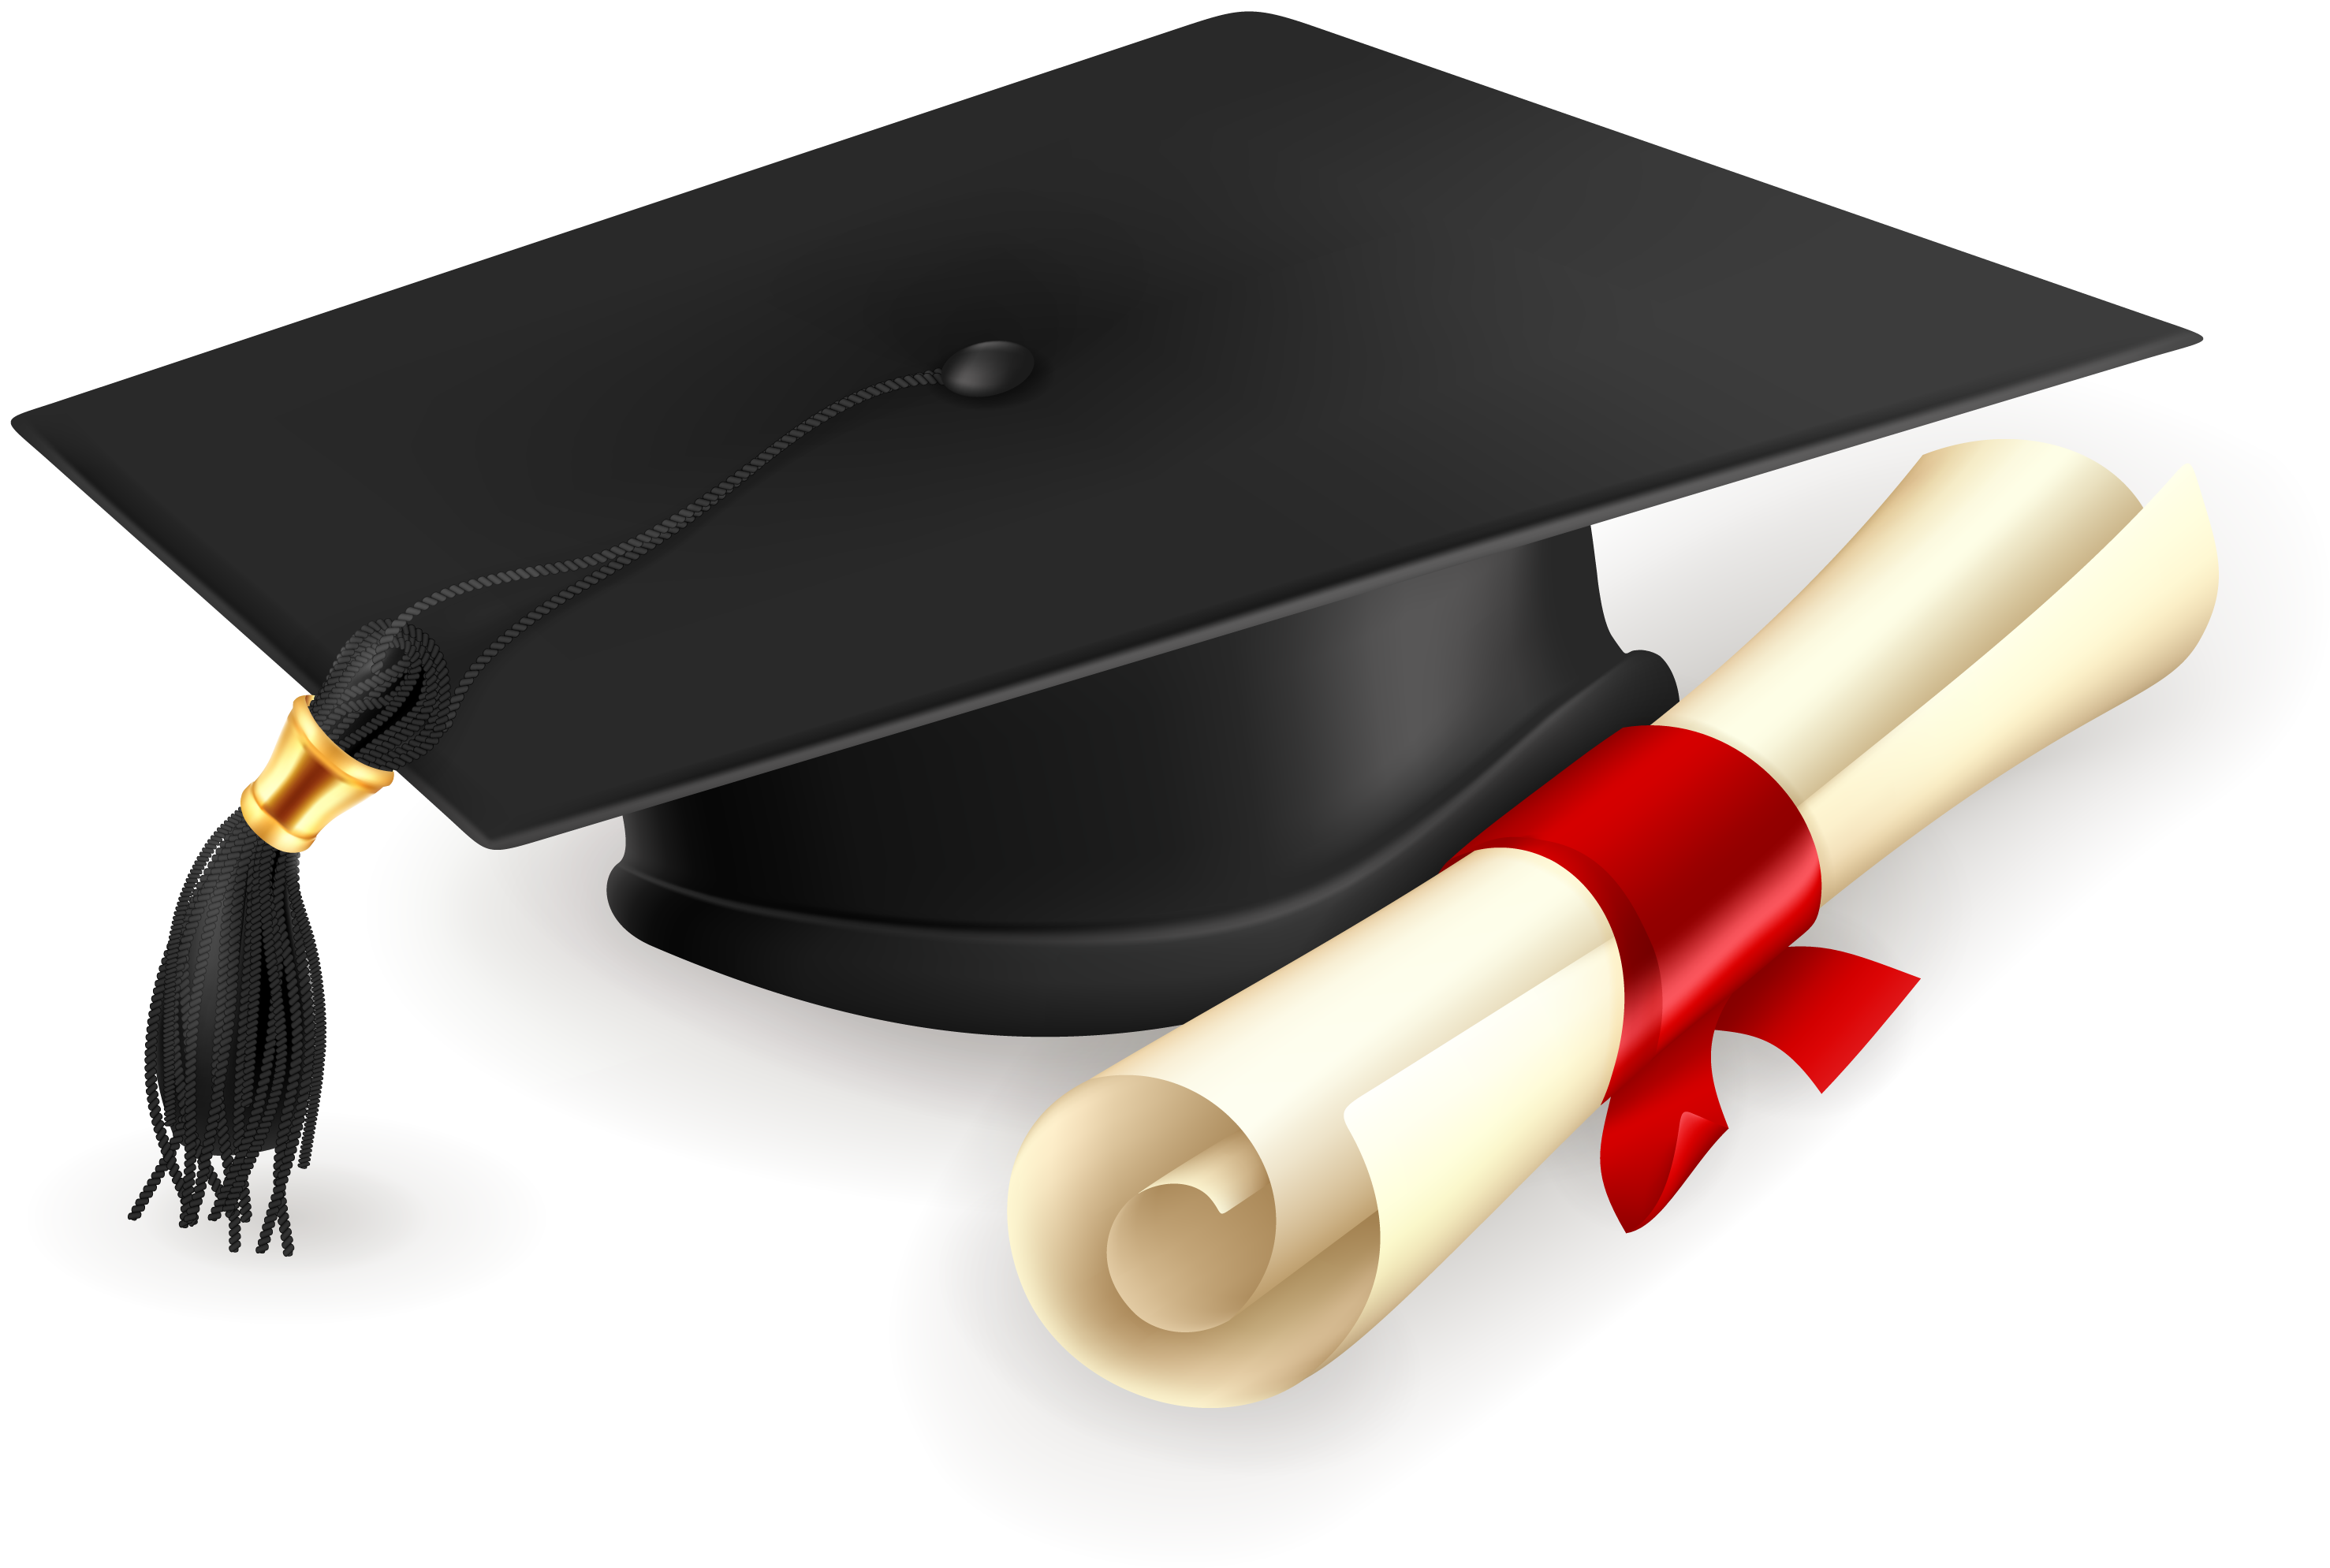 Graduation cap and scroll